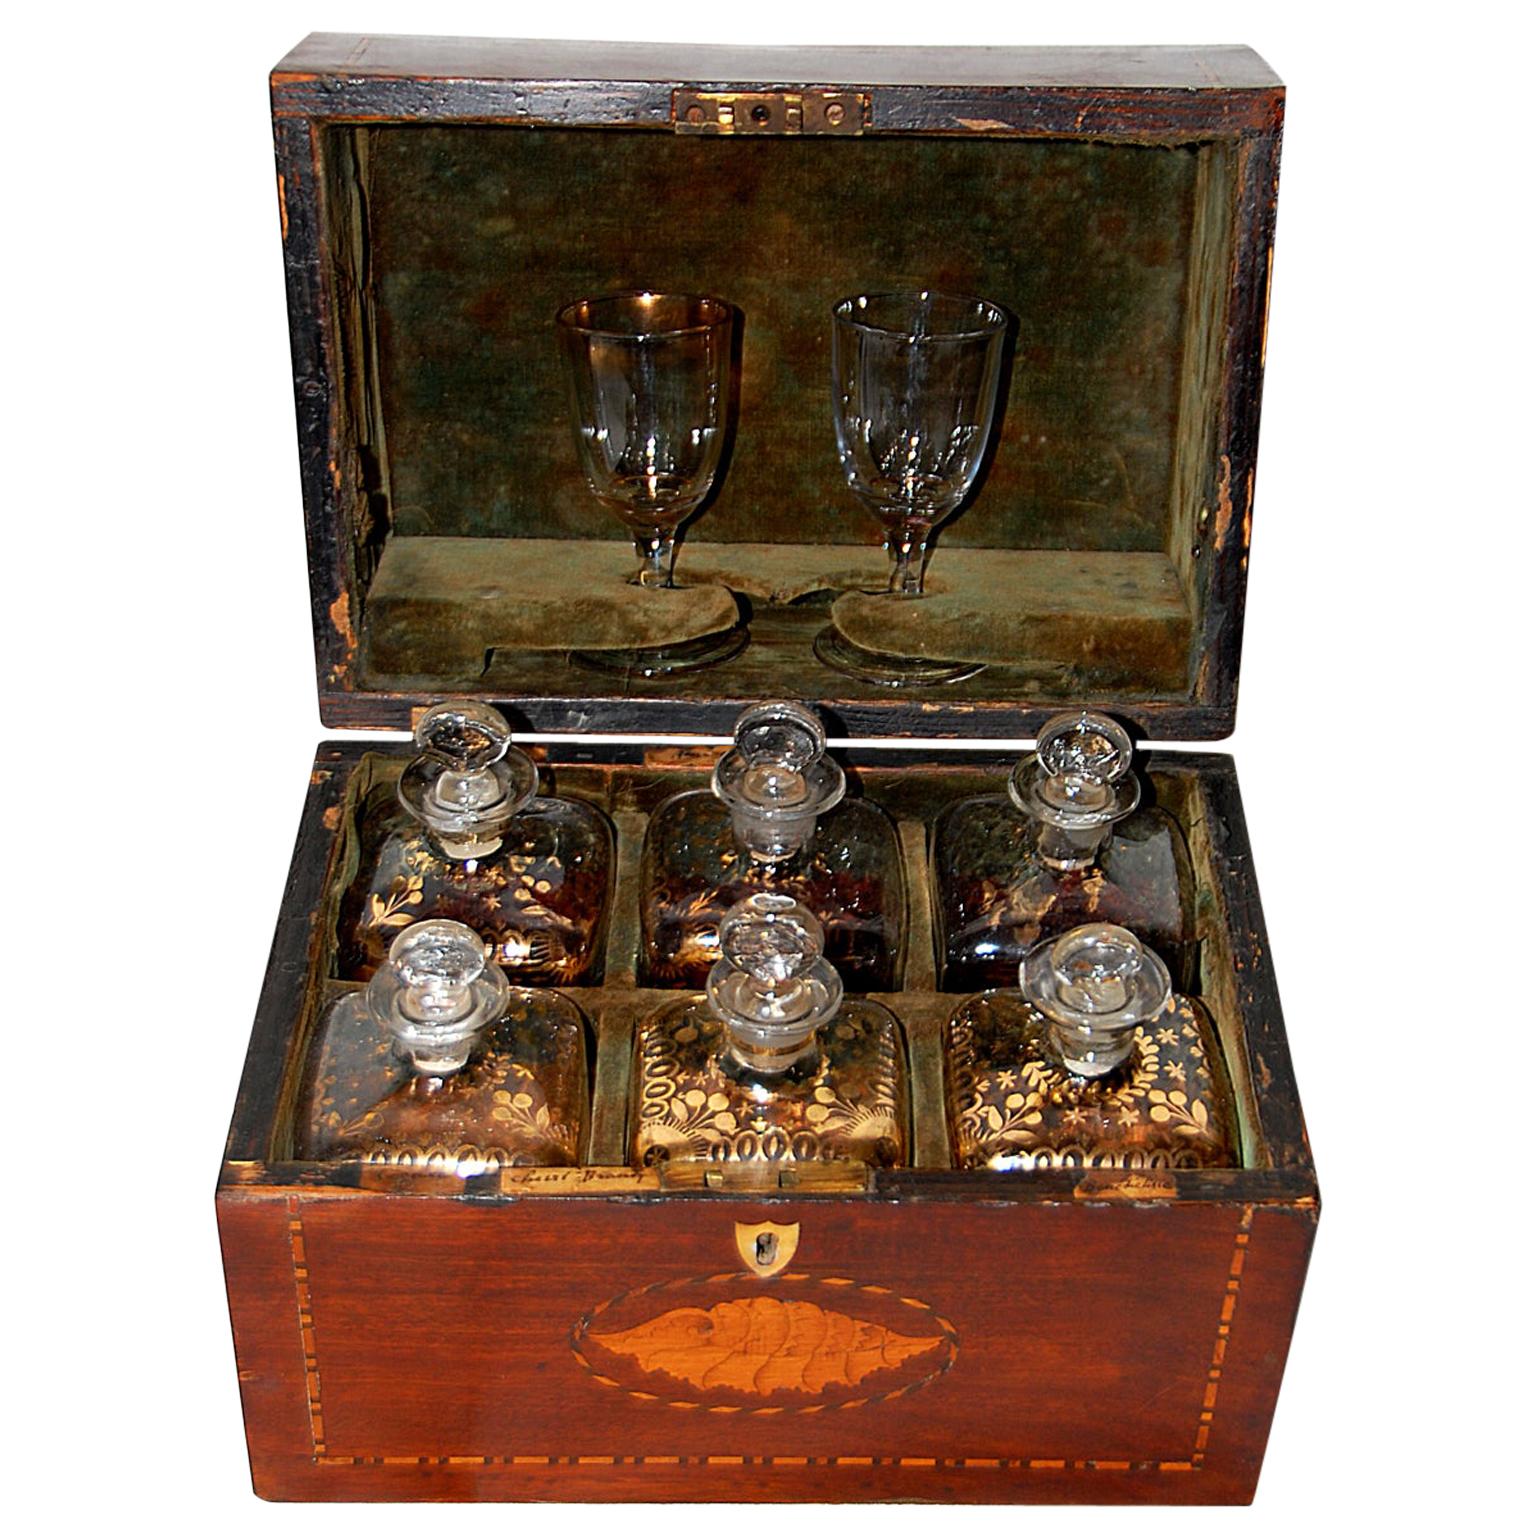 English Georgian Inlaid Liquor Box with Six Original Bottles and Two Glasses